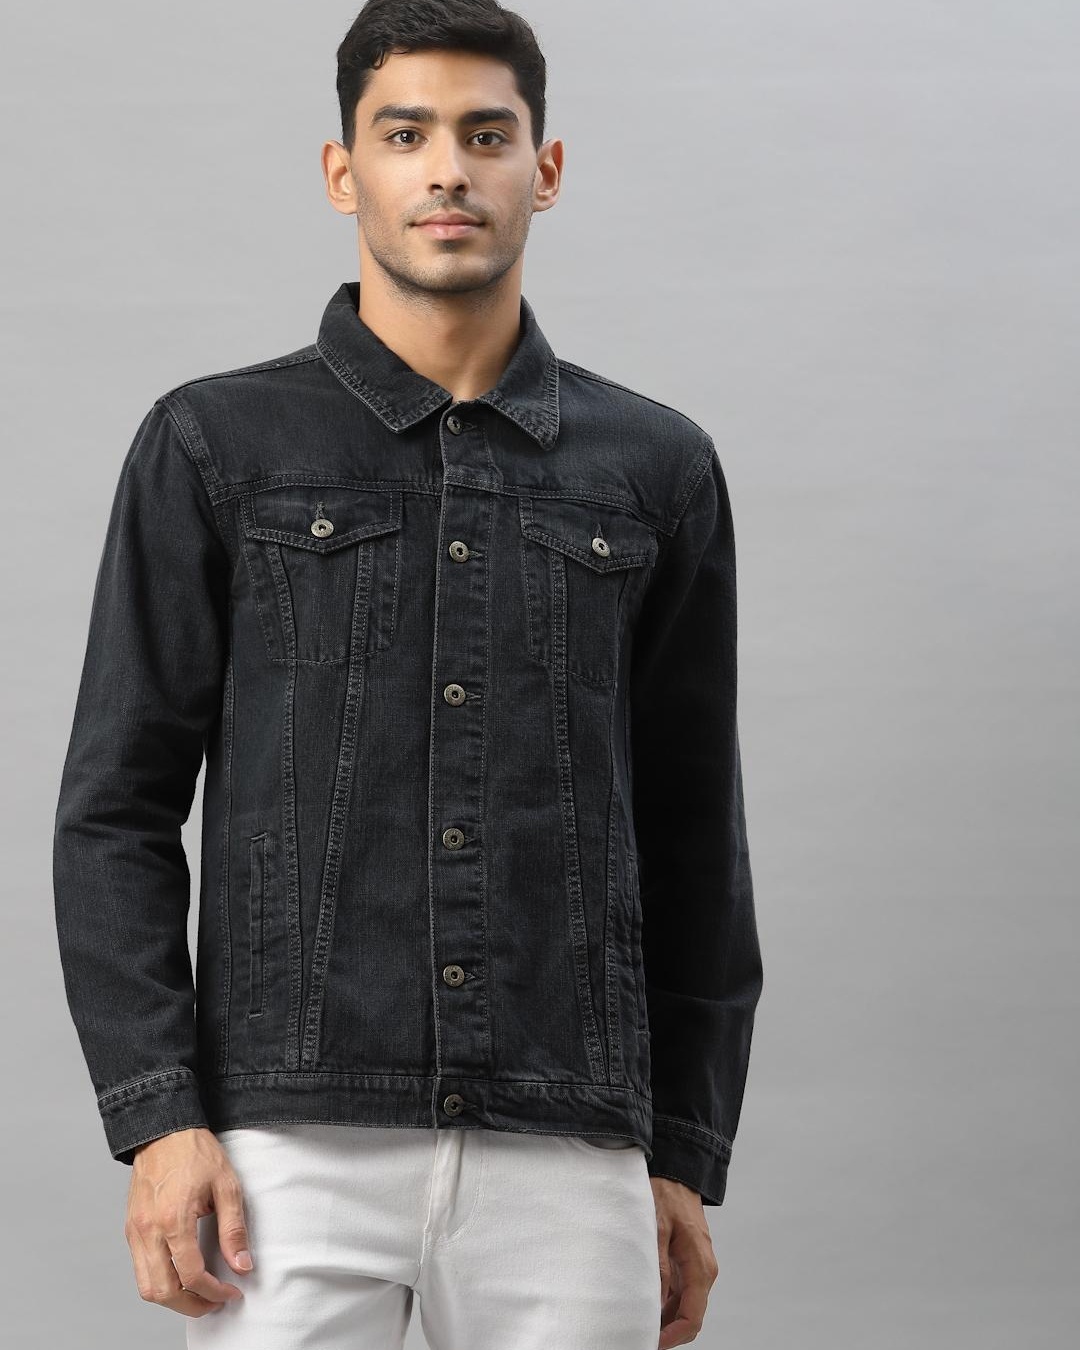 Buy Men's Black Full Sleeve Stylish Casual Denim Jacket Online at Bewakoof